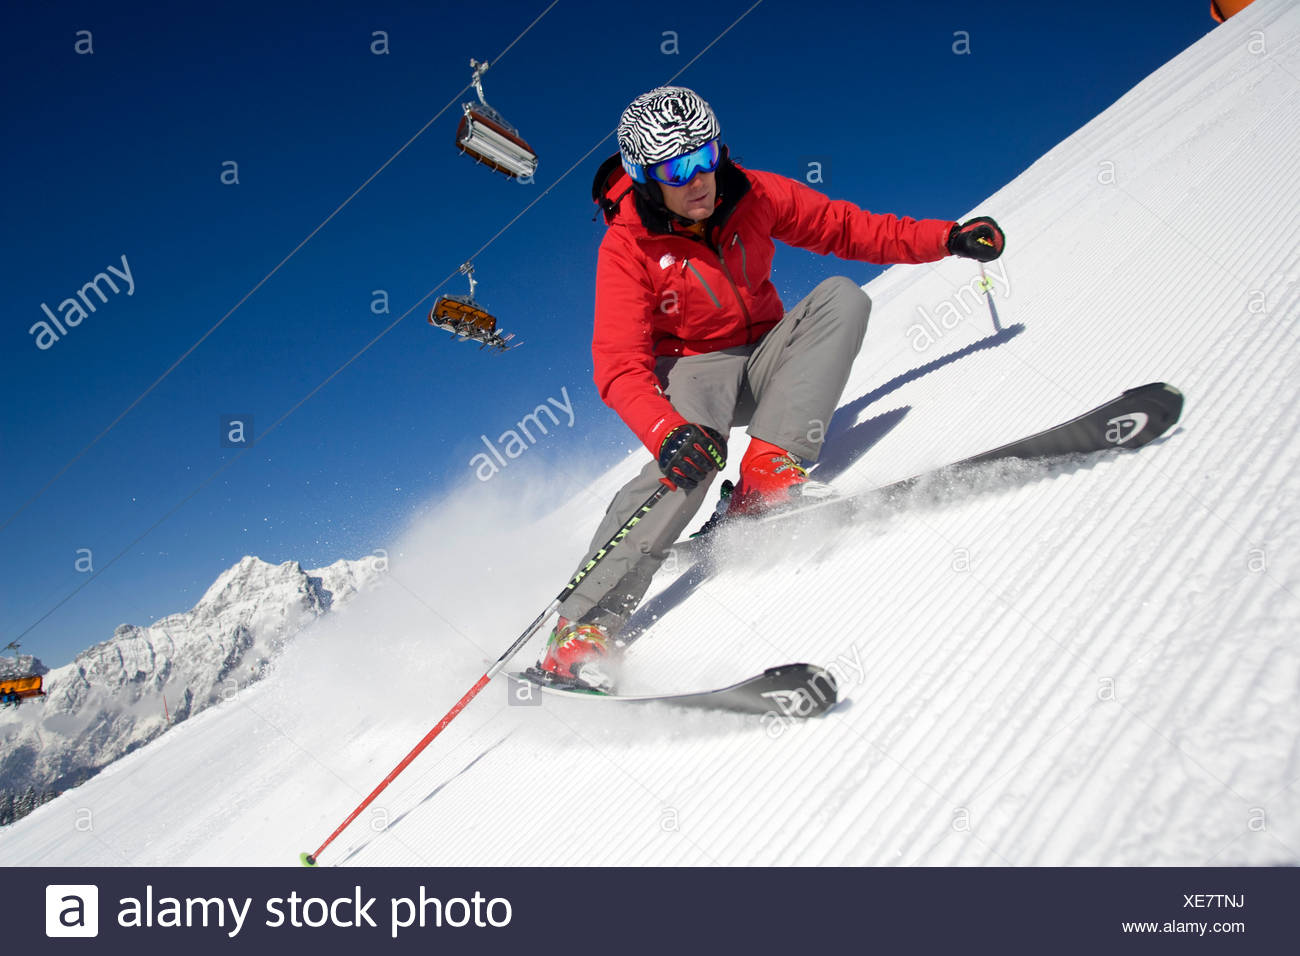 Carving, skiing, Extreme, man, ski, winter sports, fun sport ...